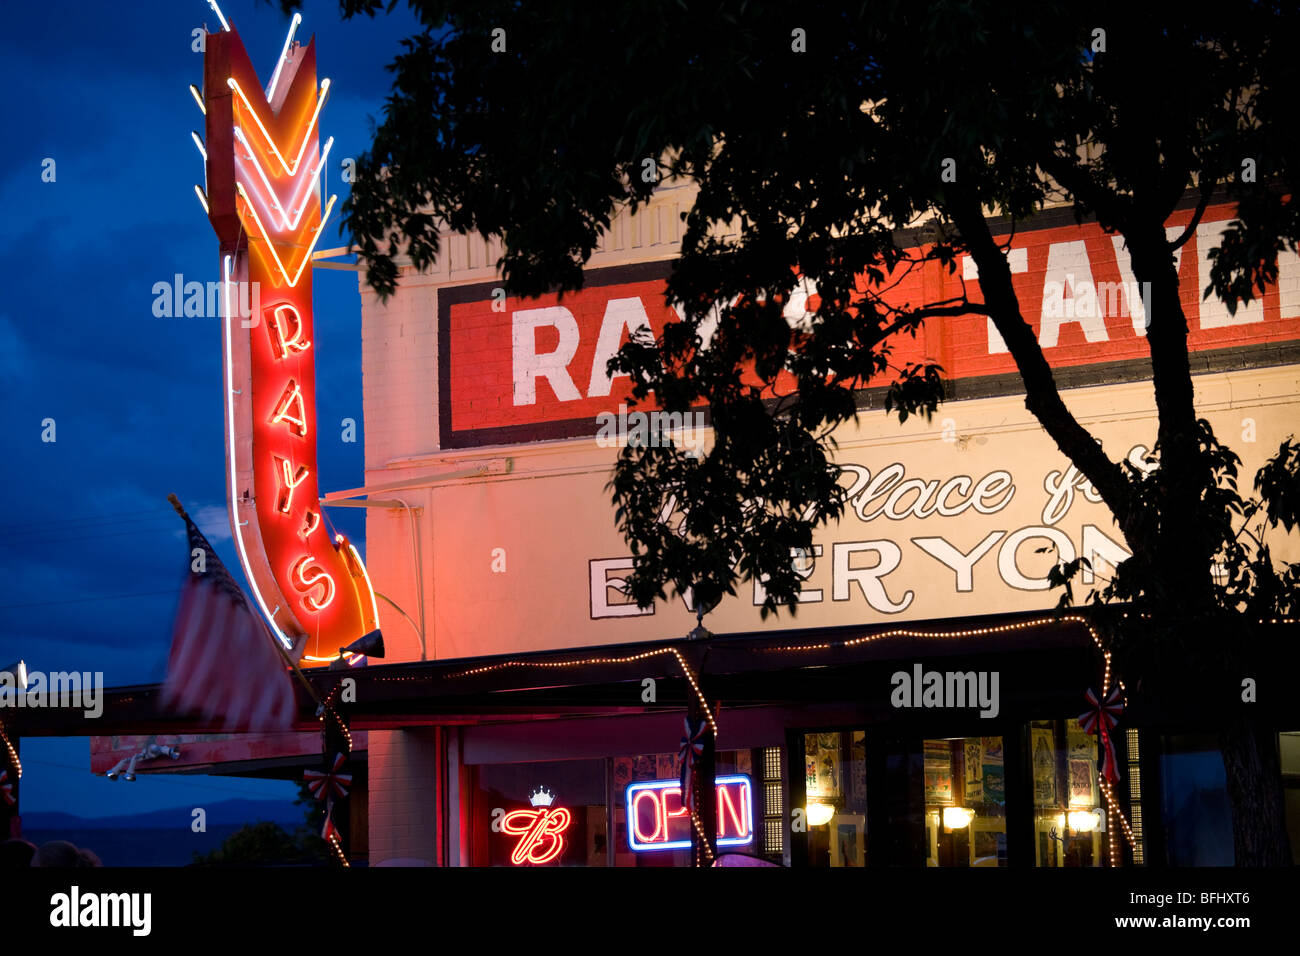 Green River en Utah Ray's Tavern steak house ; bière et burgers bar. Neon Sign at Dusk Banque D'Images